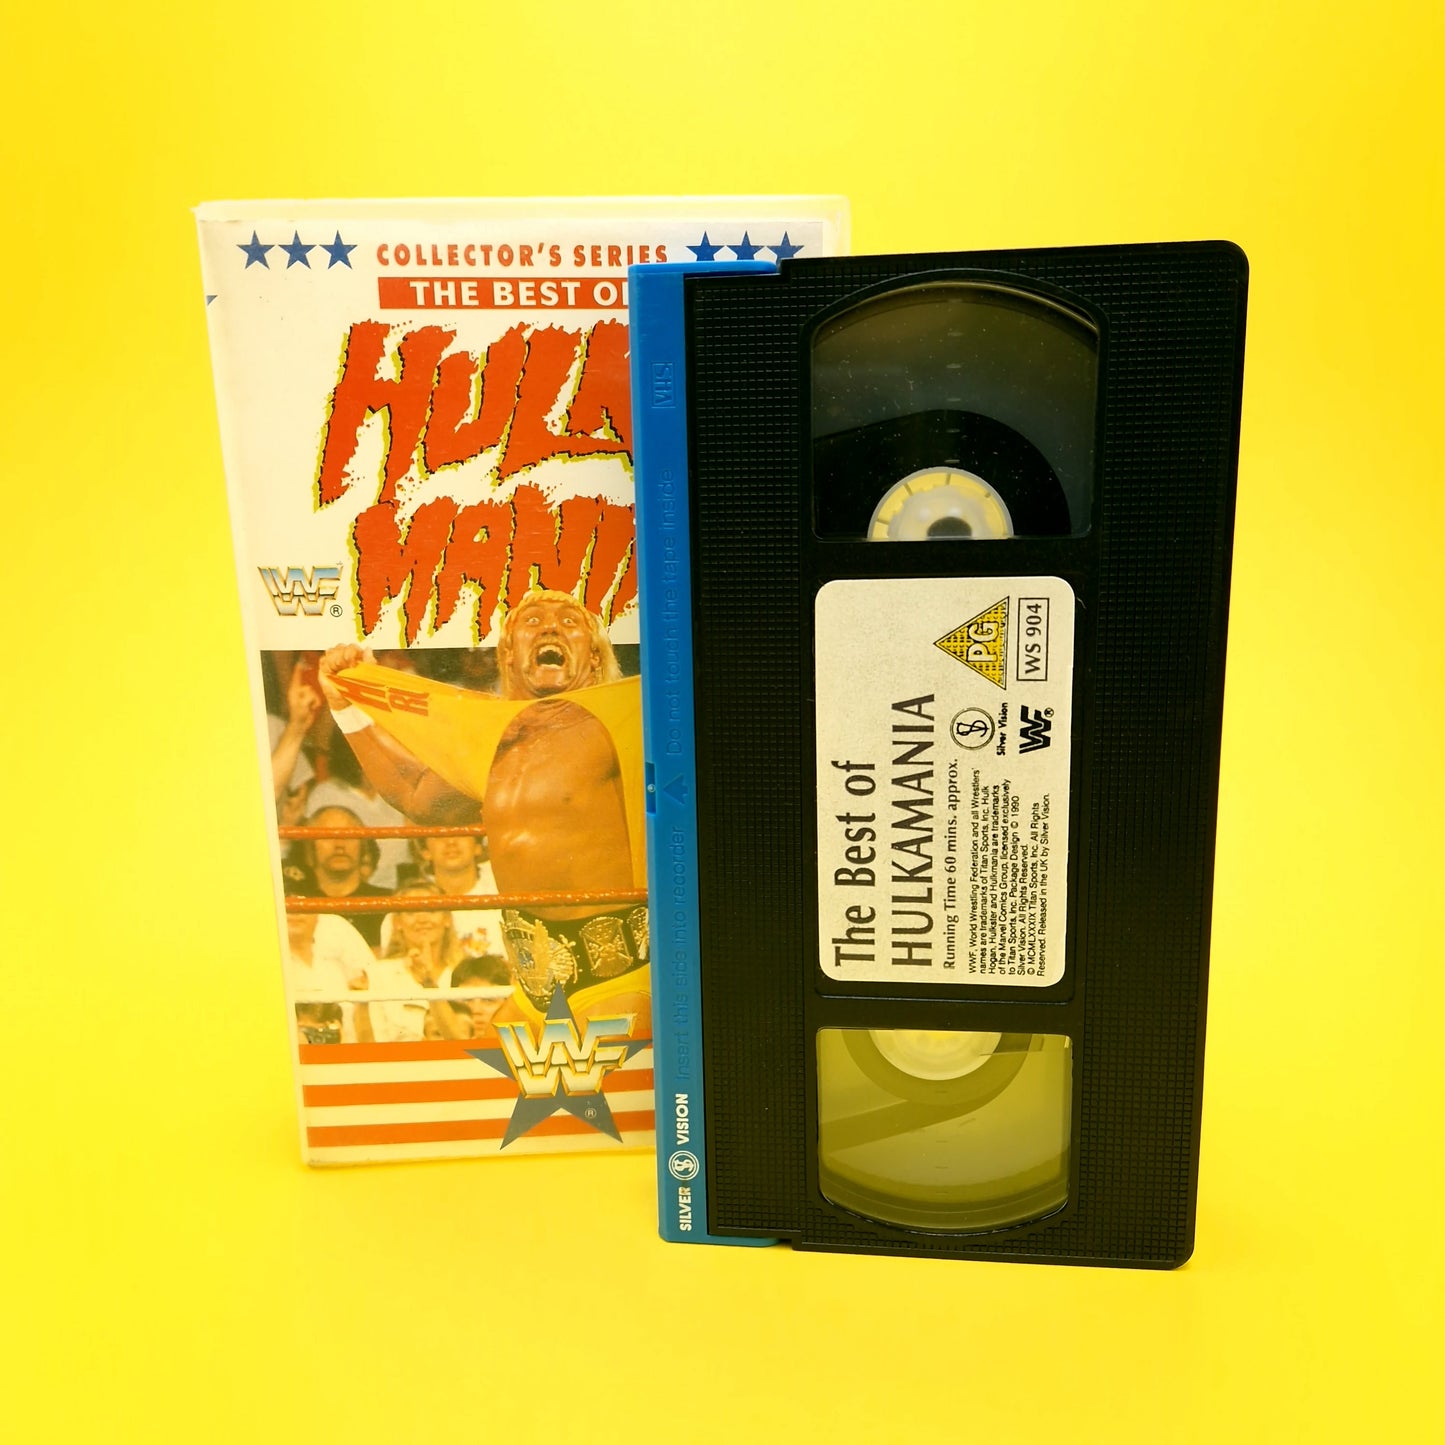 VHS Video ☆ WWF The Best of HULKAMANIA UK Tape Cassette ☆ Silver Vision Vintage PG